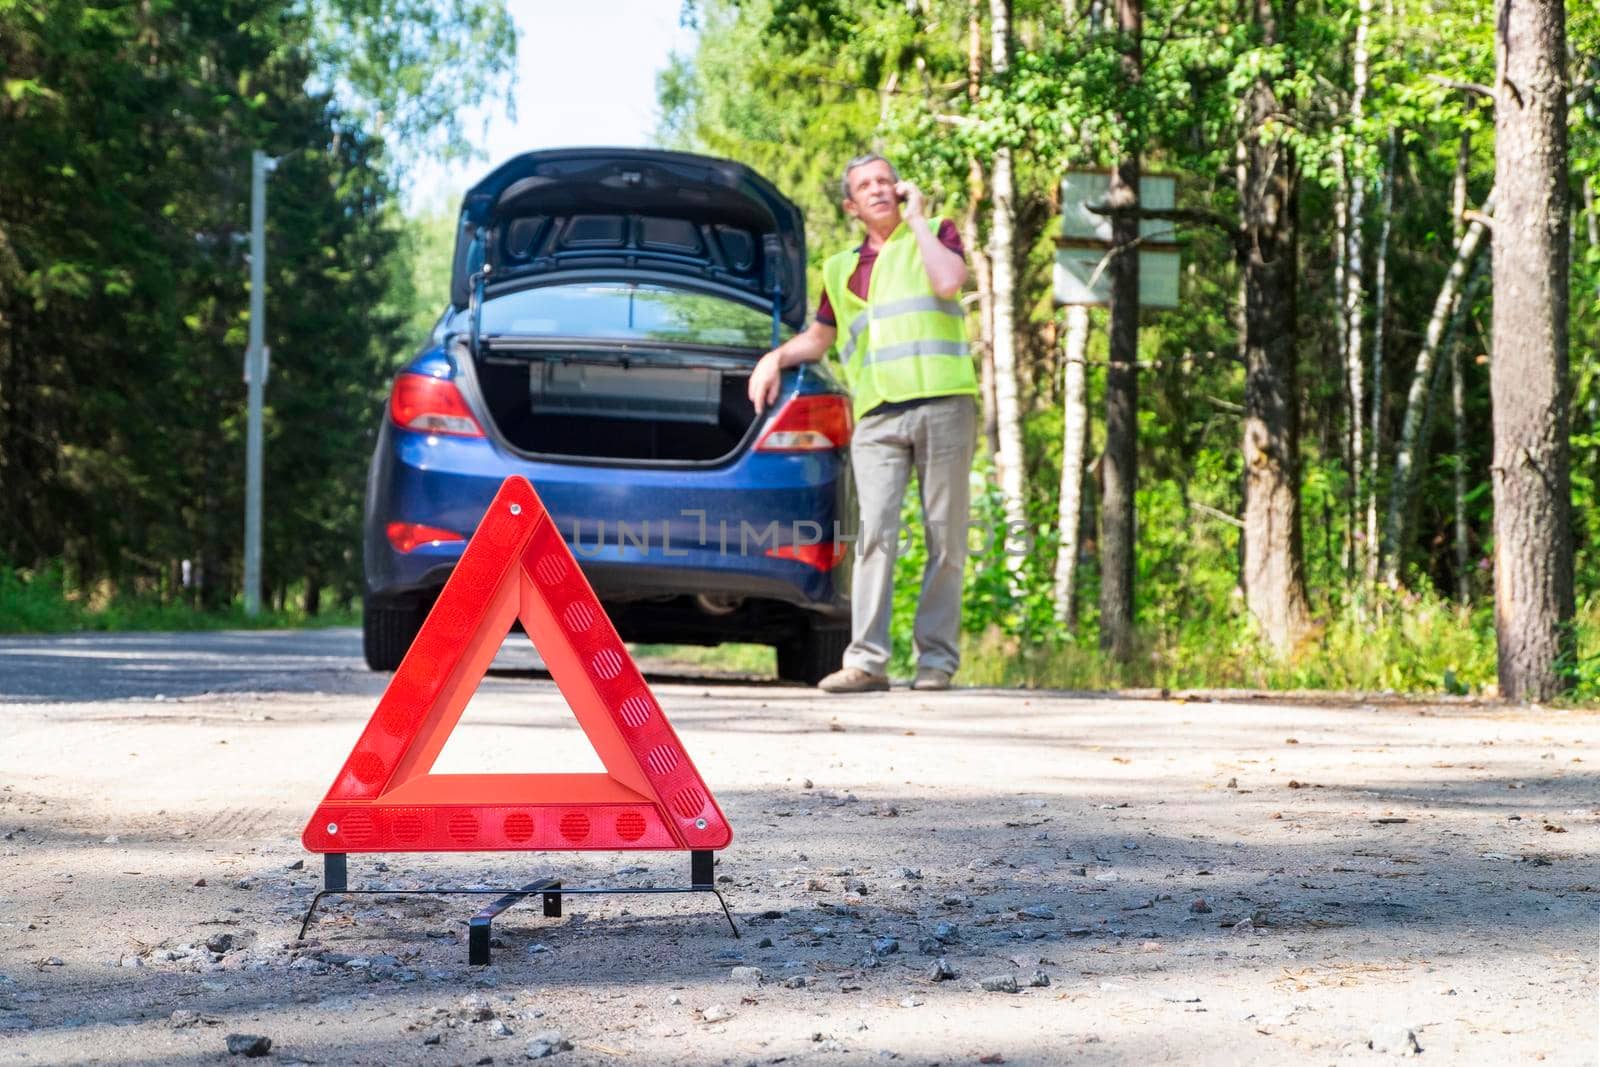 Portable warning triangular sign on the side of rural road near a car by OlgaGubskaya